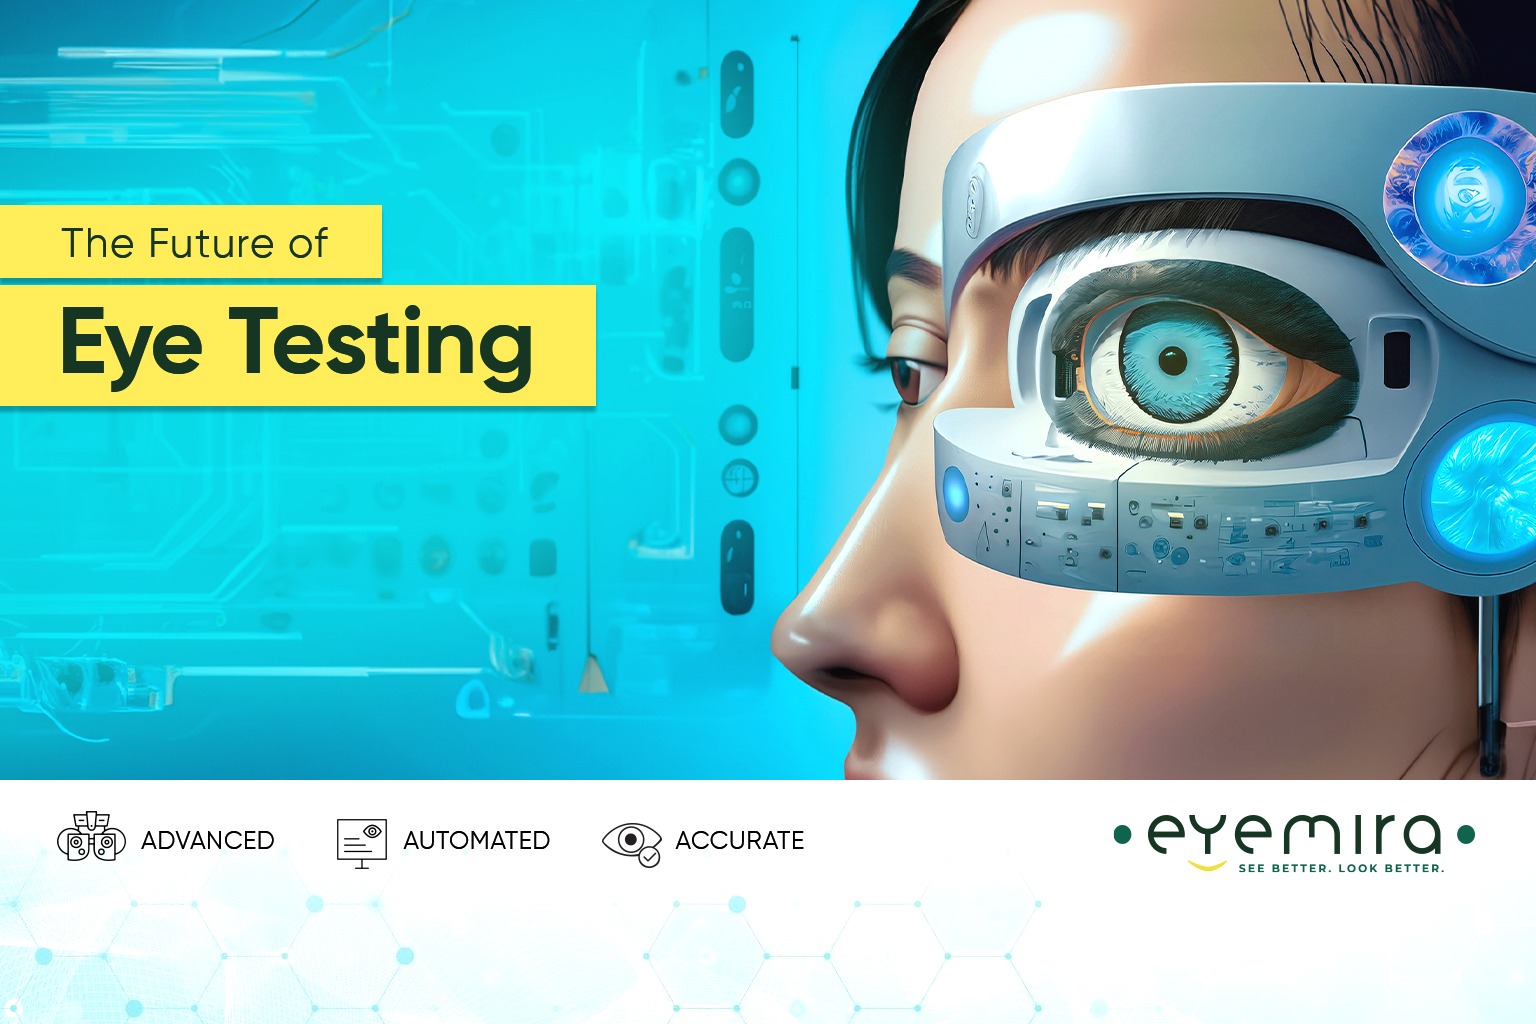 Eyemira's Advanced Eye Test